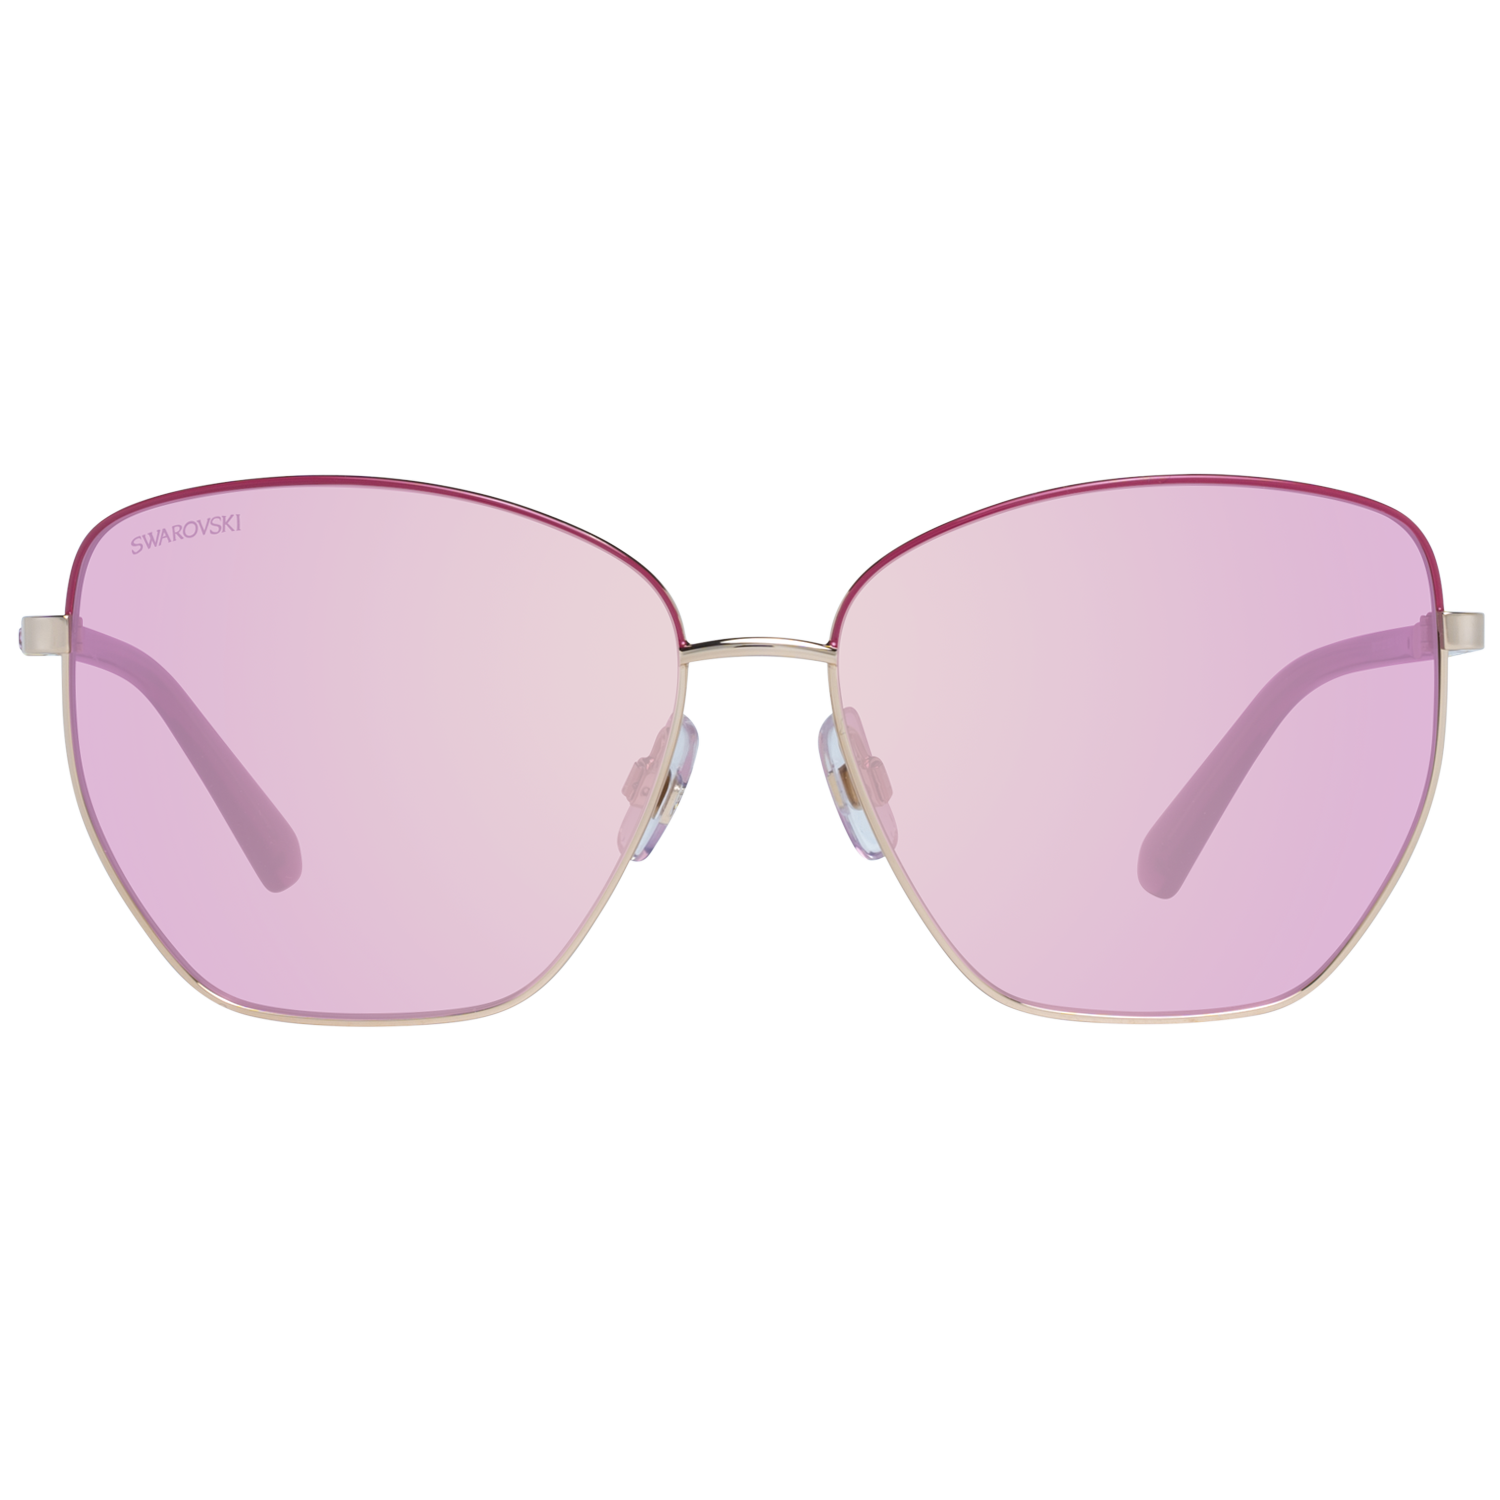 Swarovski Sunglasses Swarovski Sunglasses SK0311 32T 58 Eyeglasses Eyewear UK USA Australia 